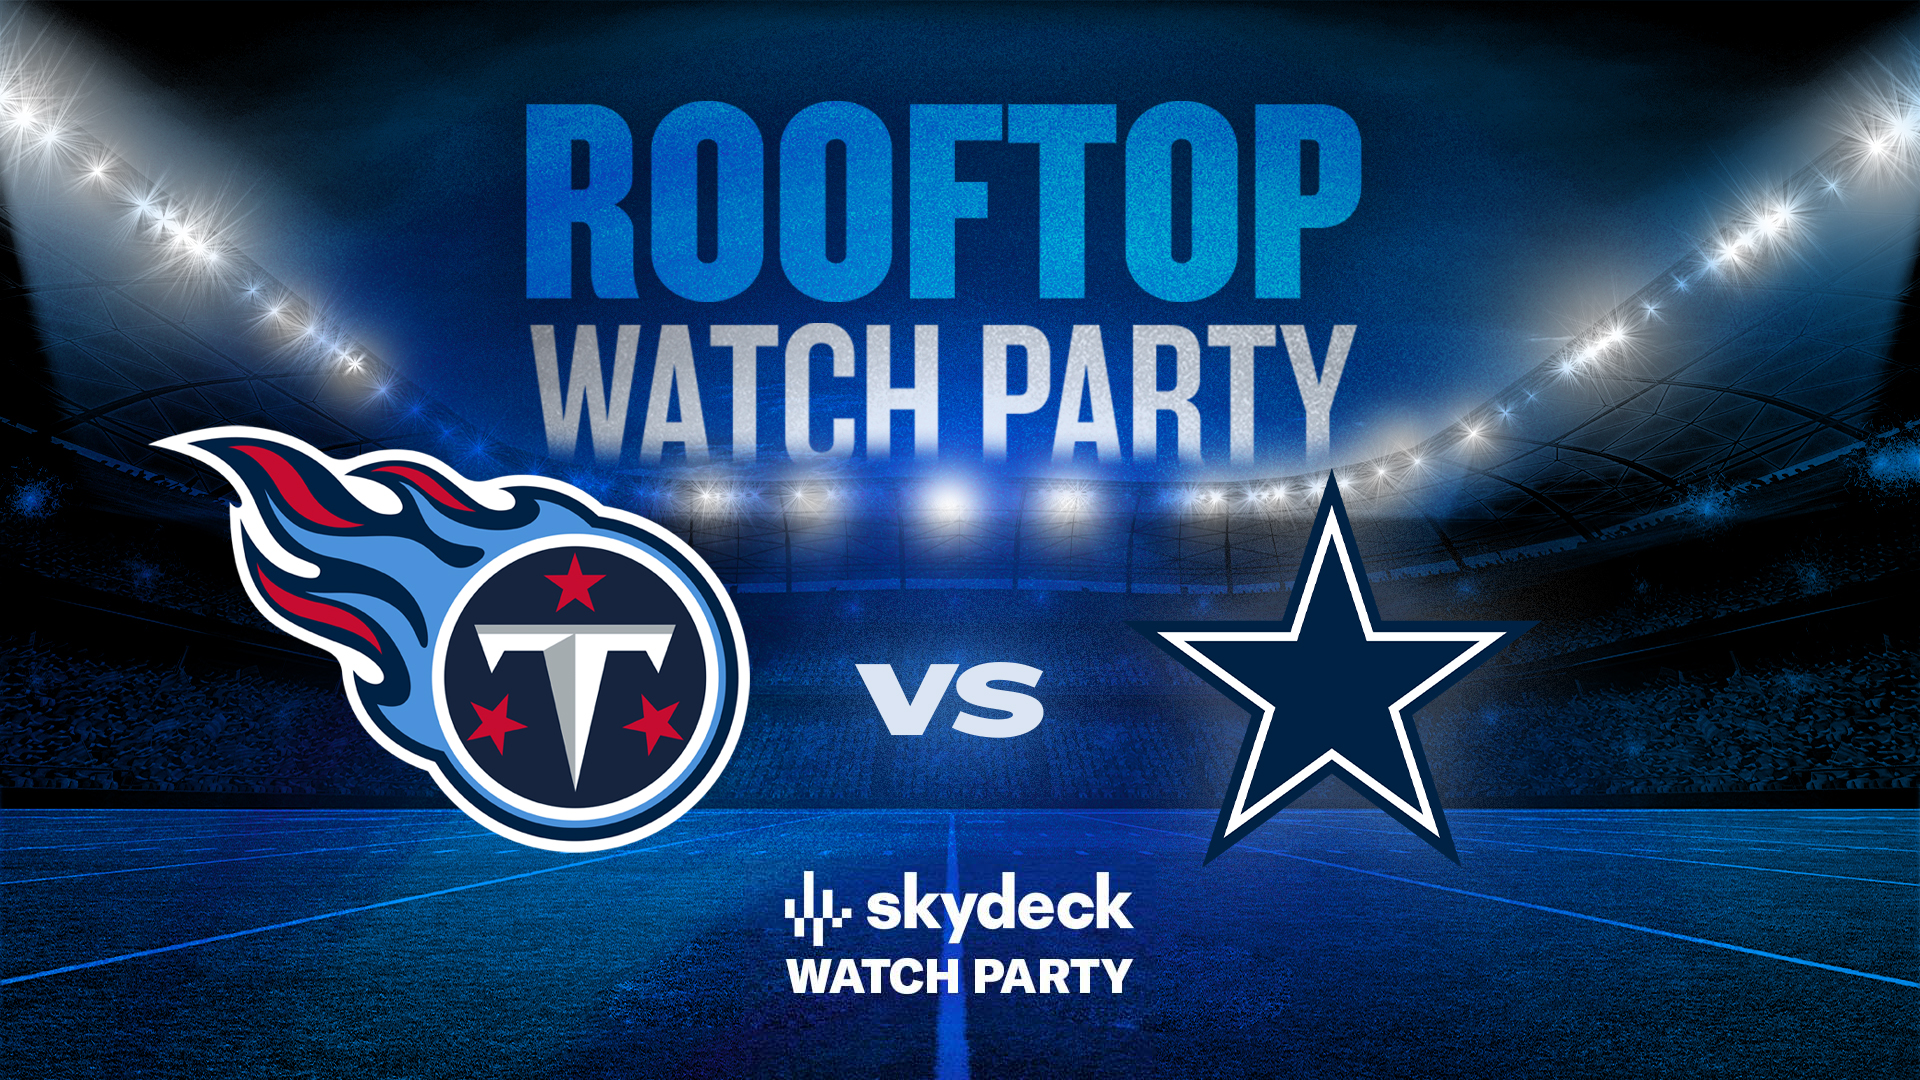 Titans vs. Cowboys, Skydeck Watch Party